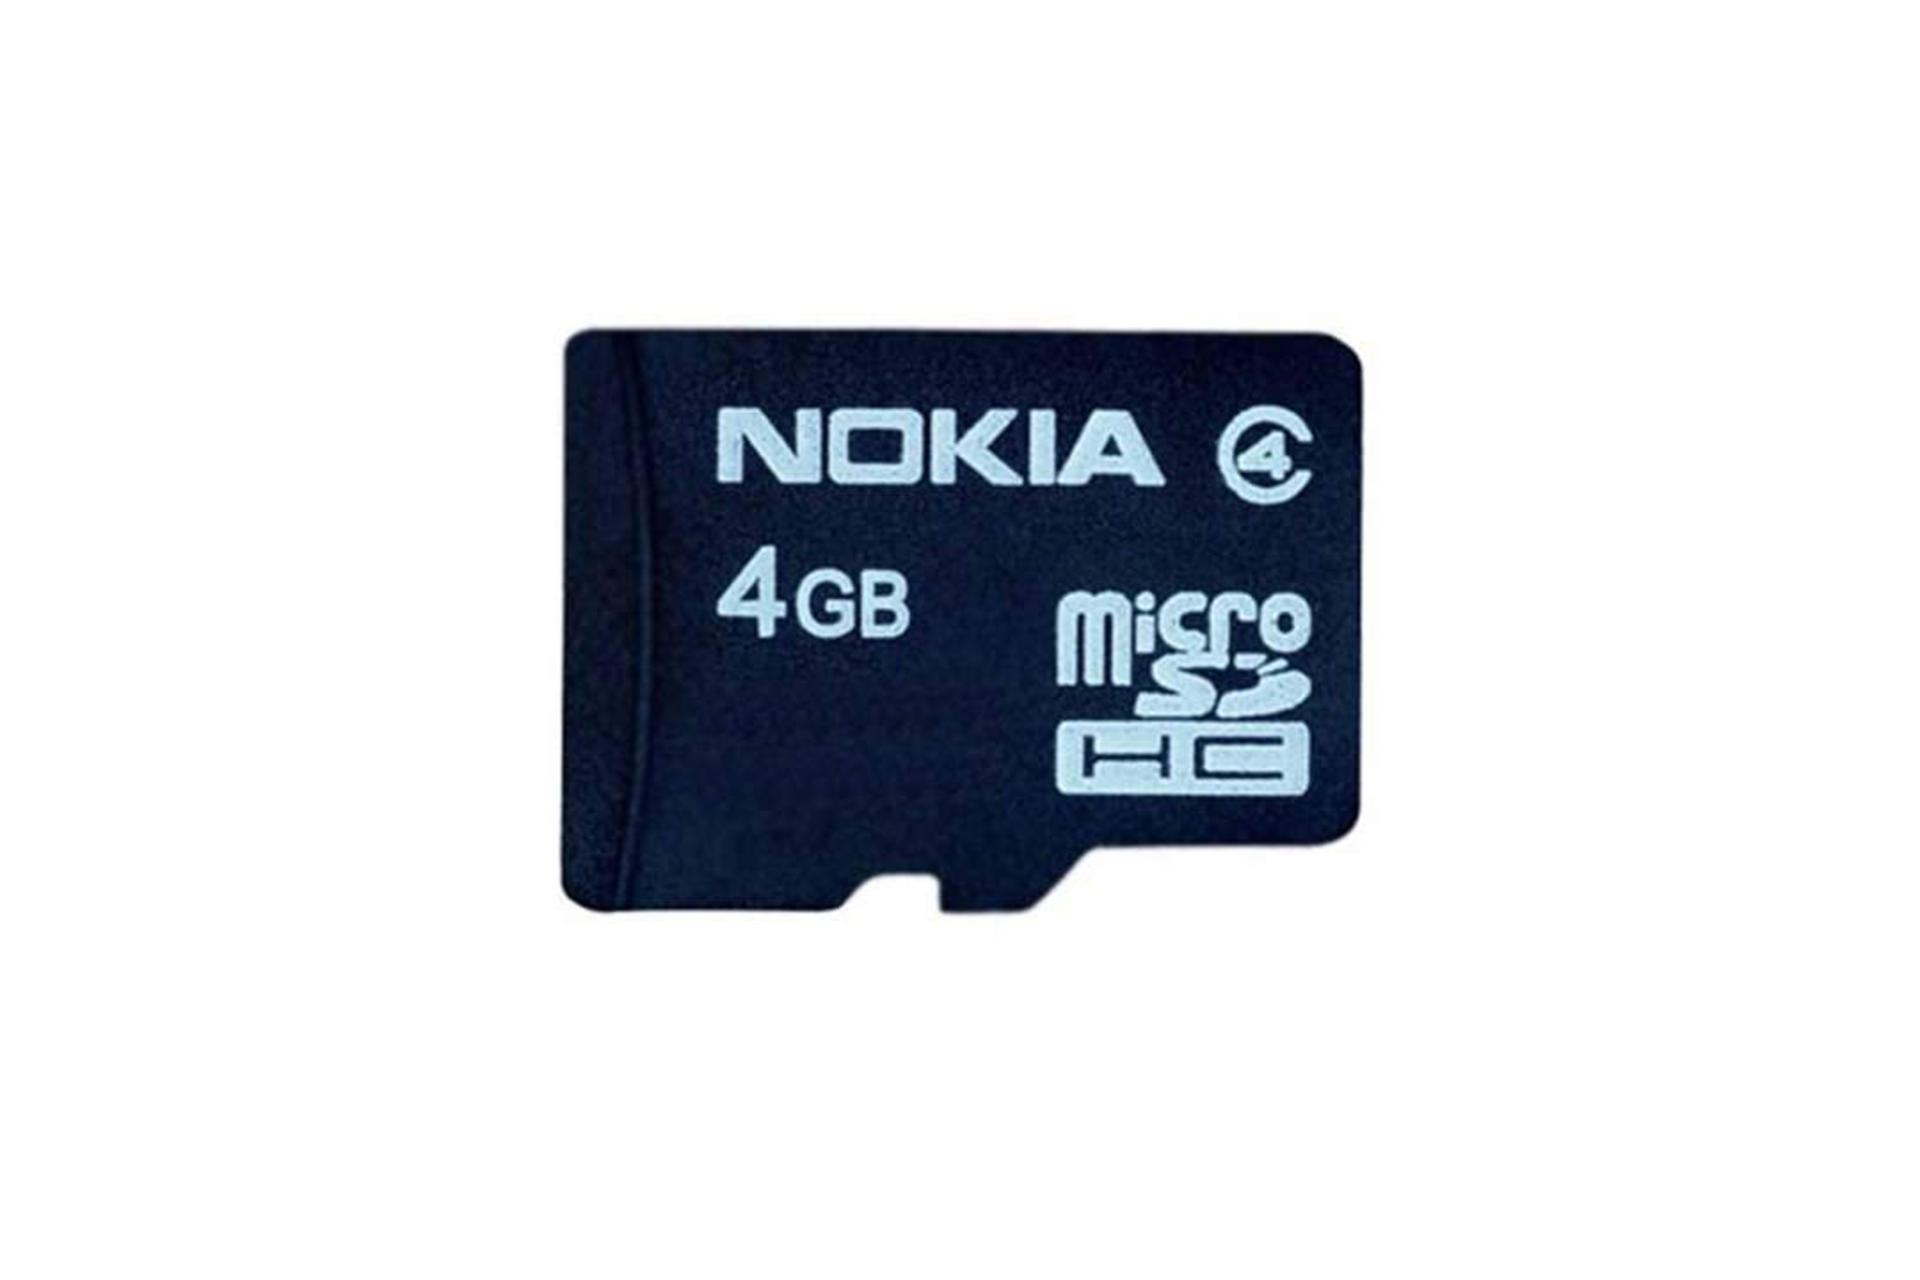 Nokia MU-41 microSDHC Class 4 4GB